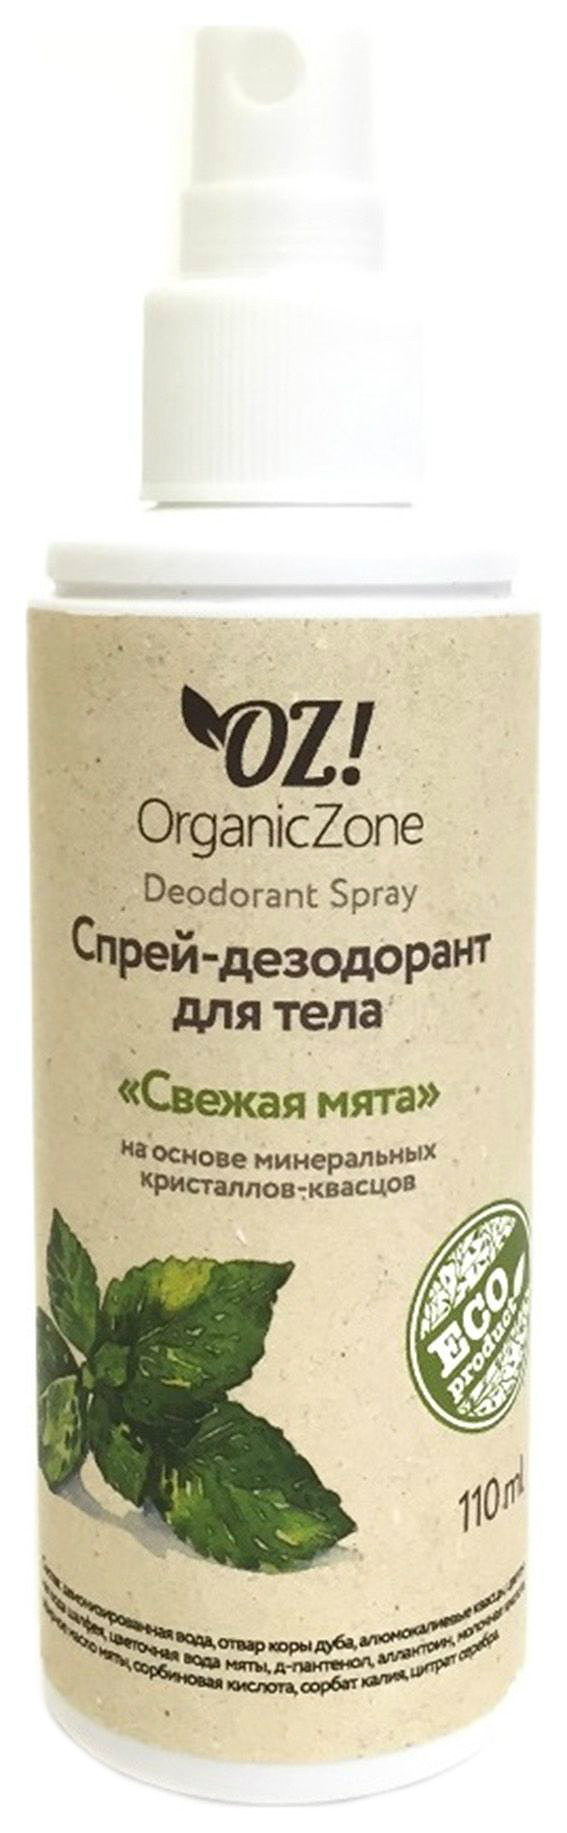 Дезодорант OrganicZone Свежая мята 110 мл be sage спрей дезодорант мята 100 0